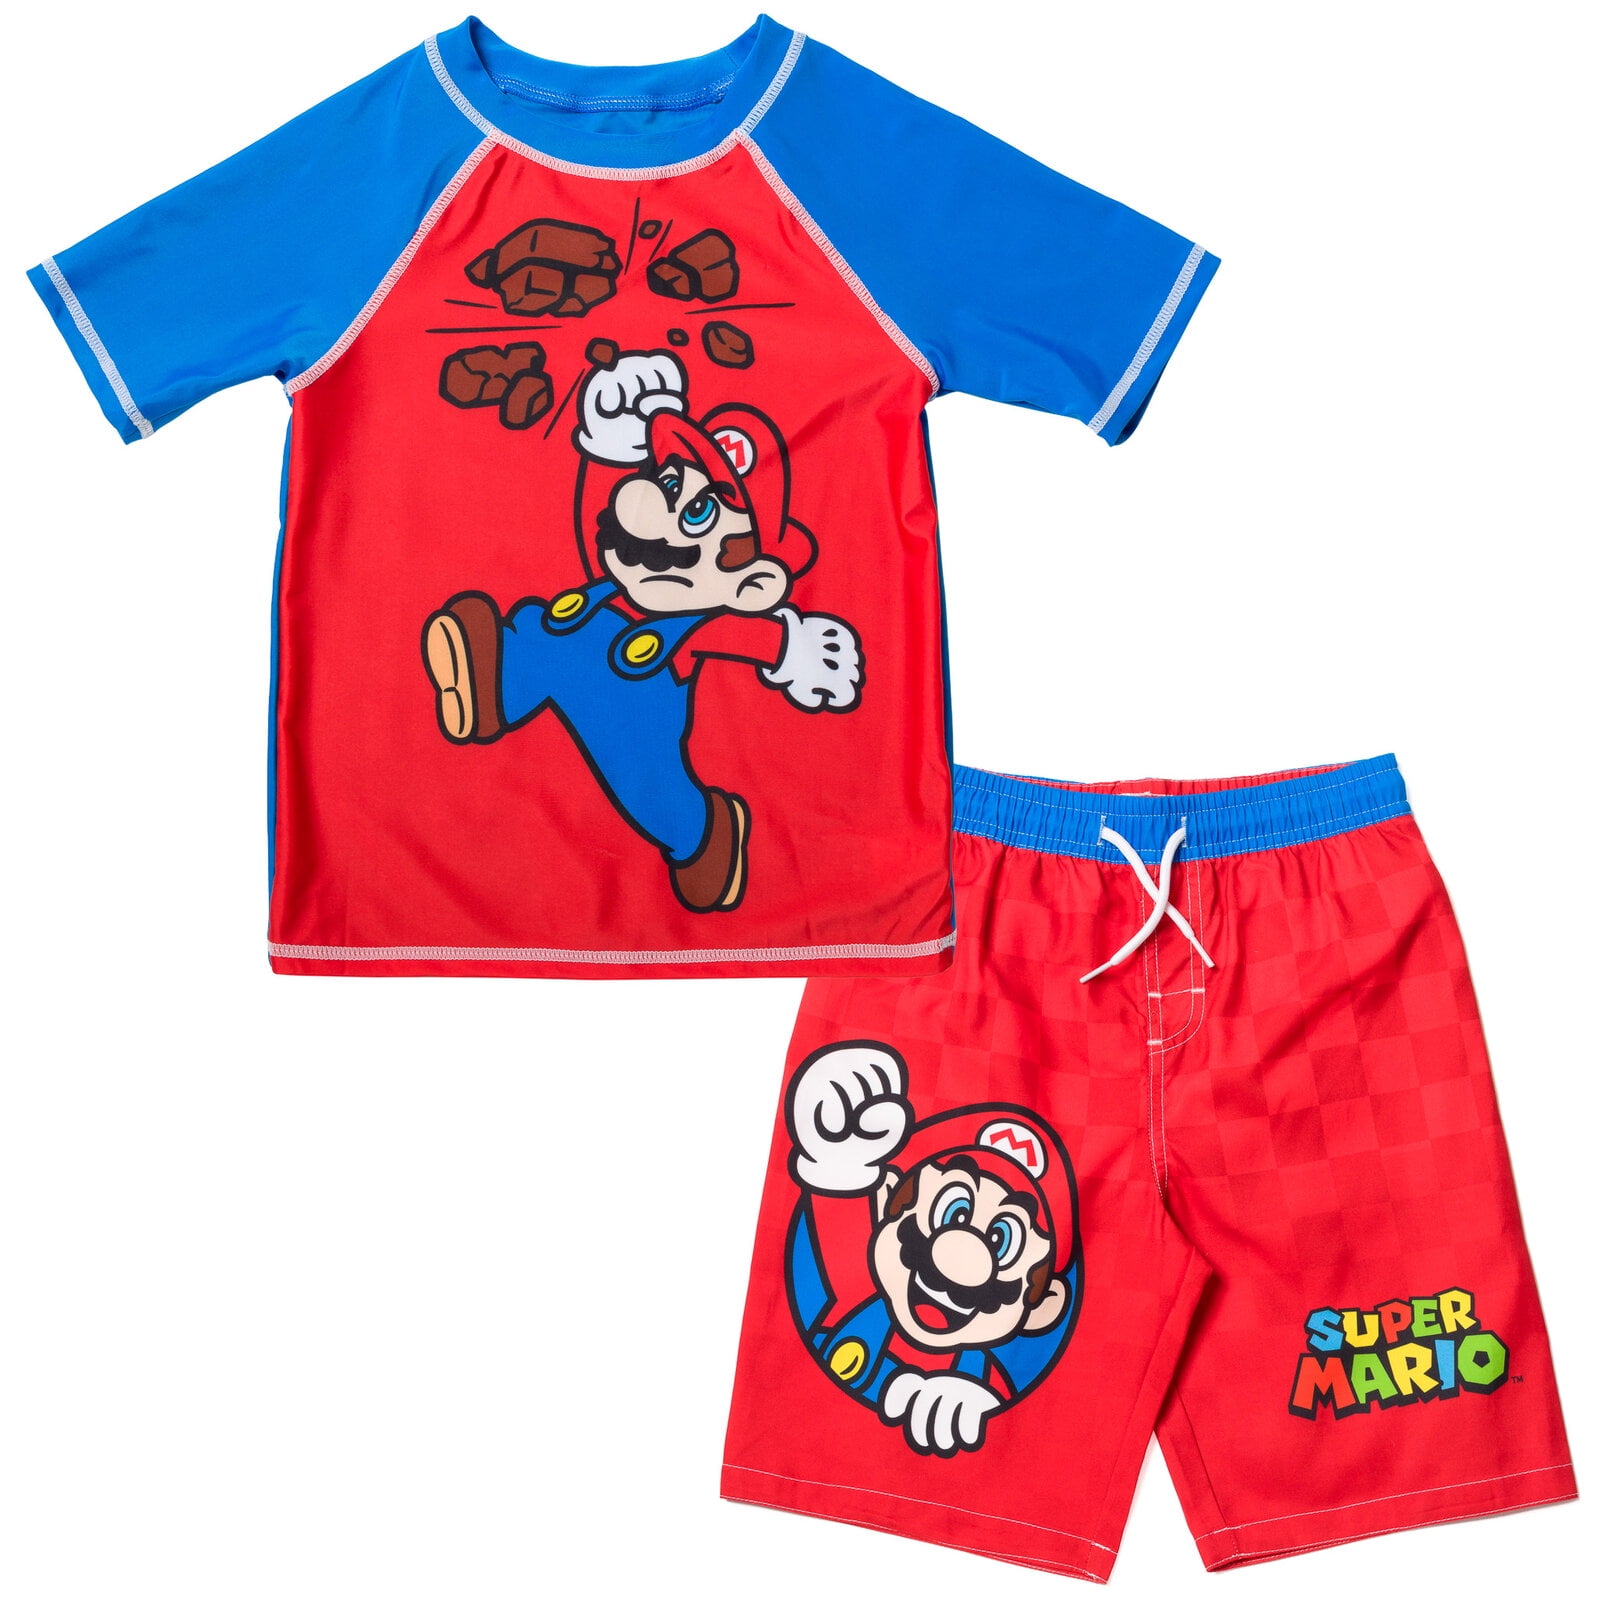 SUPER MARIO Nintendo Toddler Boys Rash Guard and Swim Trunks Outfit Set ...